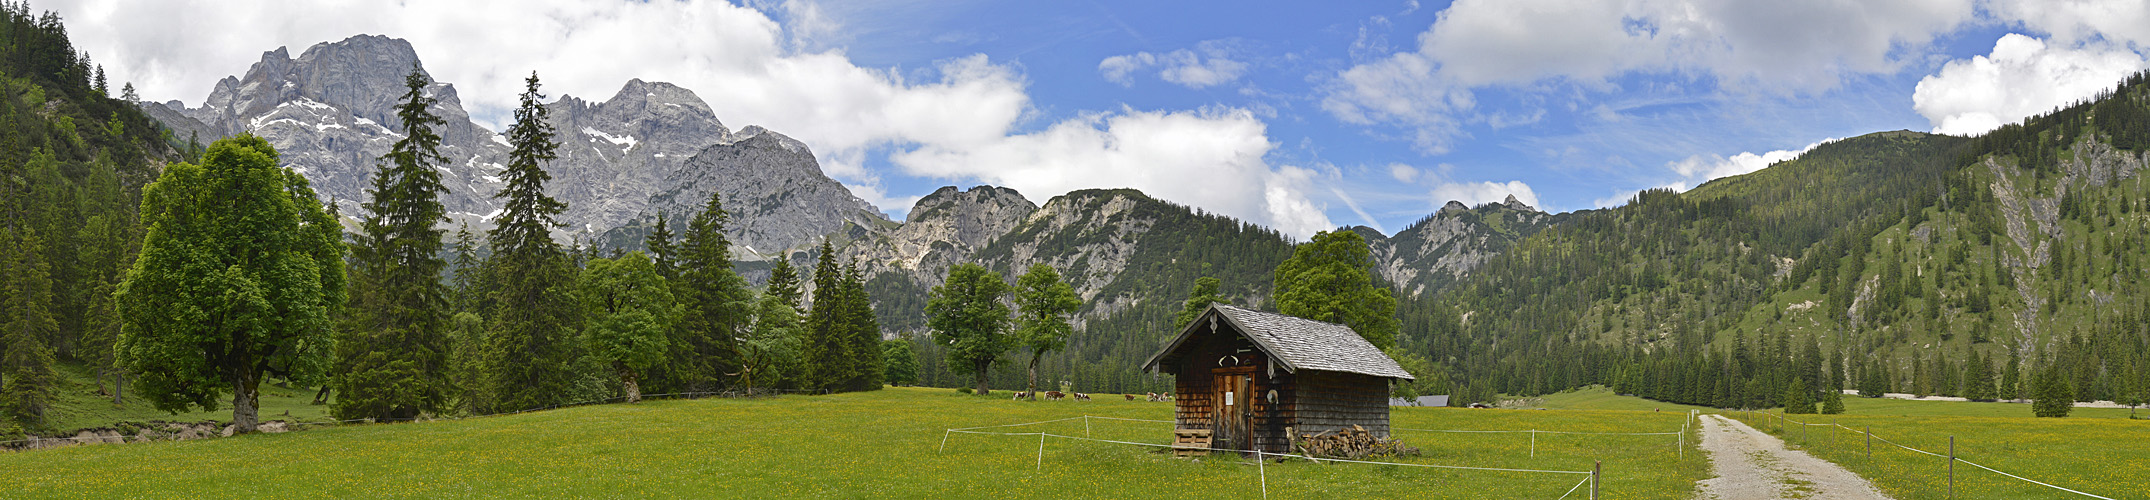 Tirol,Austria